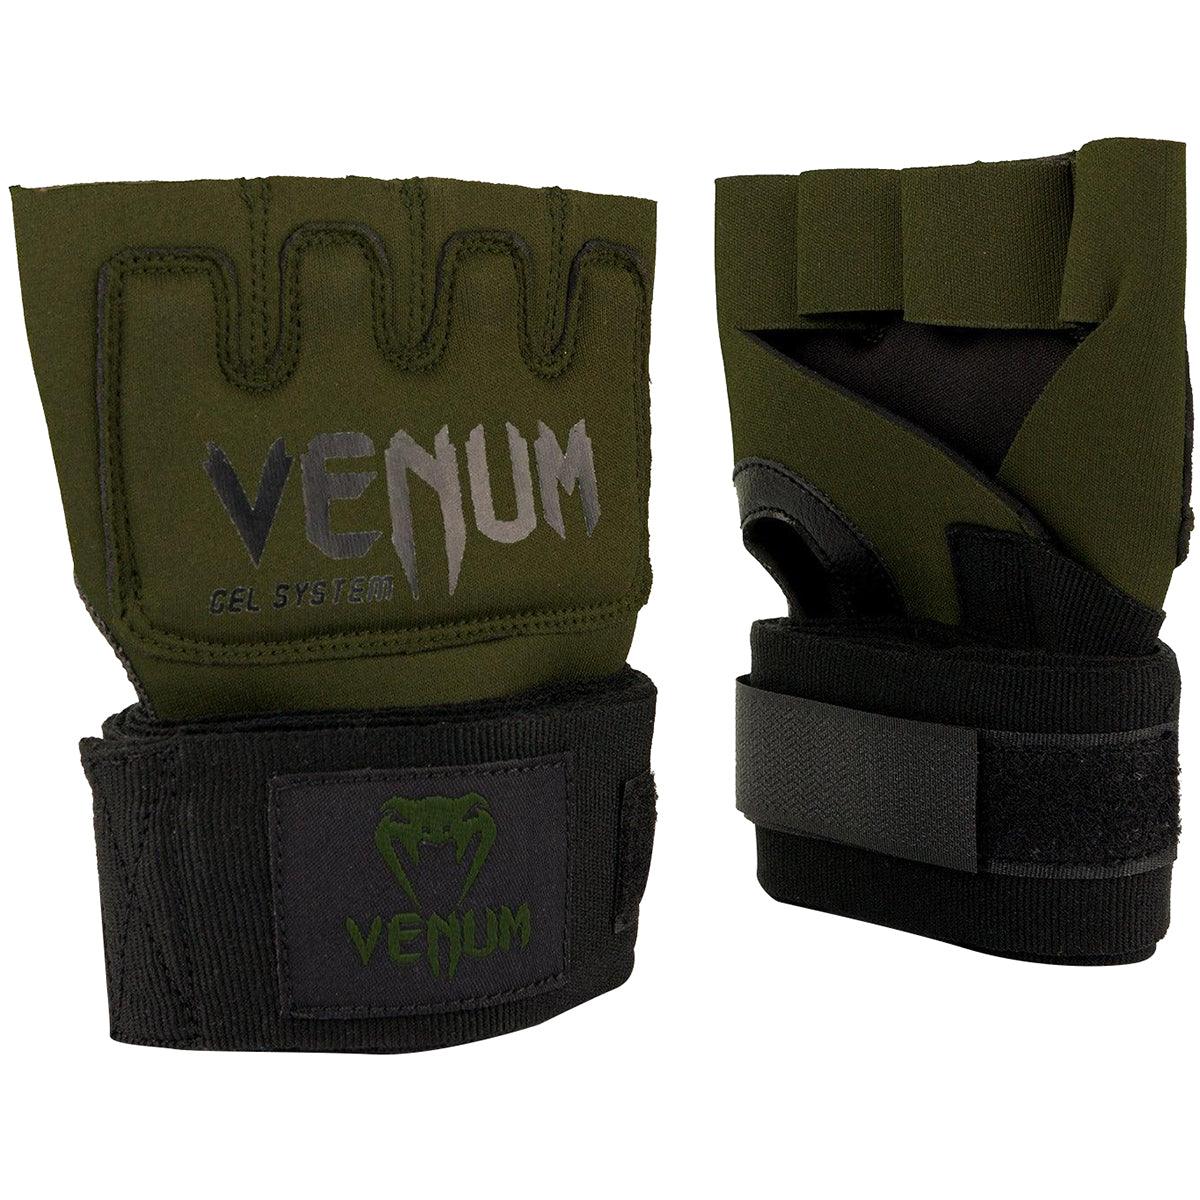 Venum Kontact Boxing Gel Glove Wraps - Khaki/Black Venum